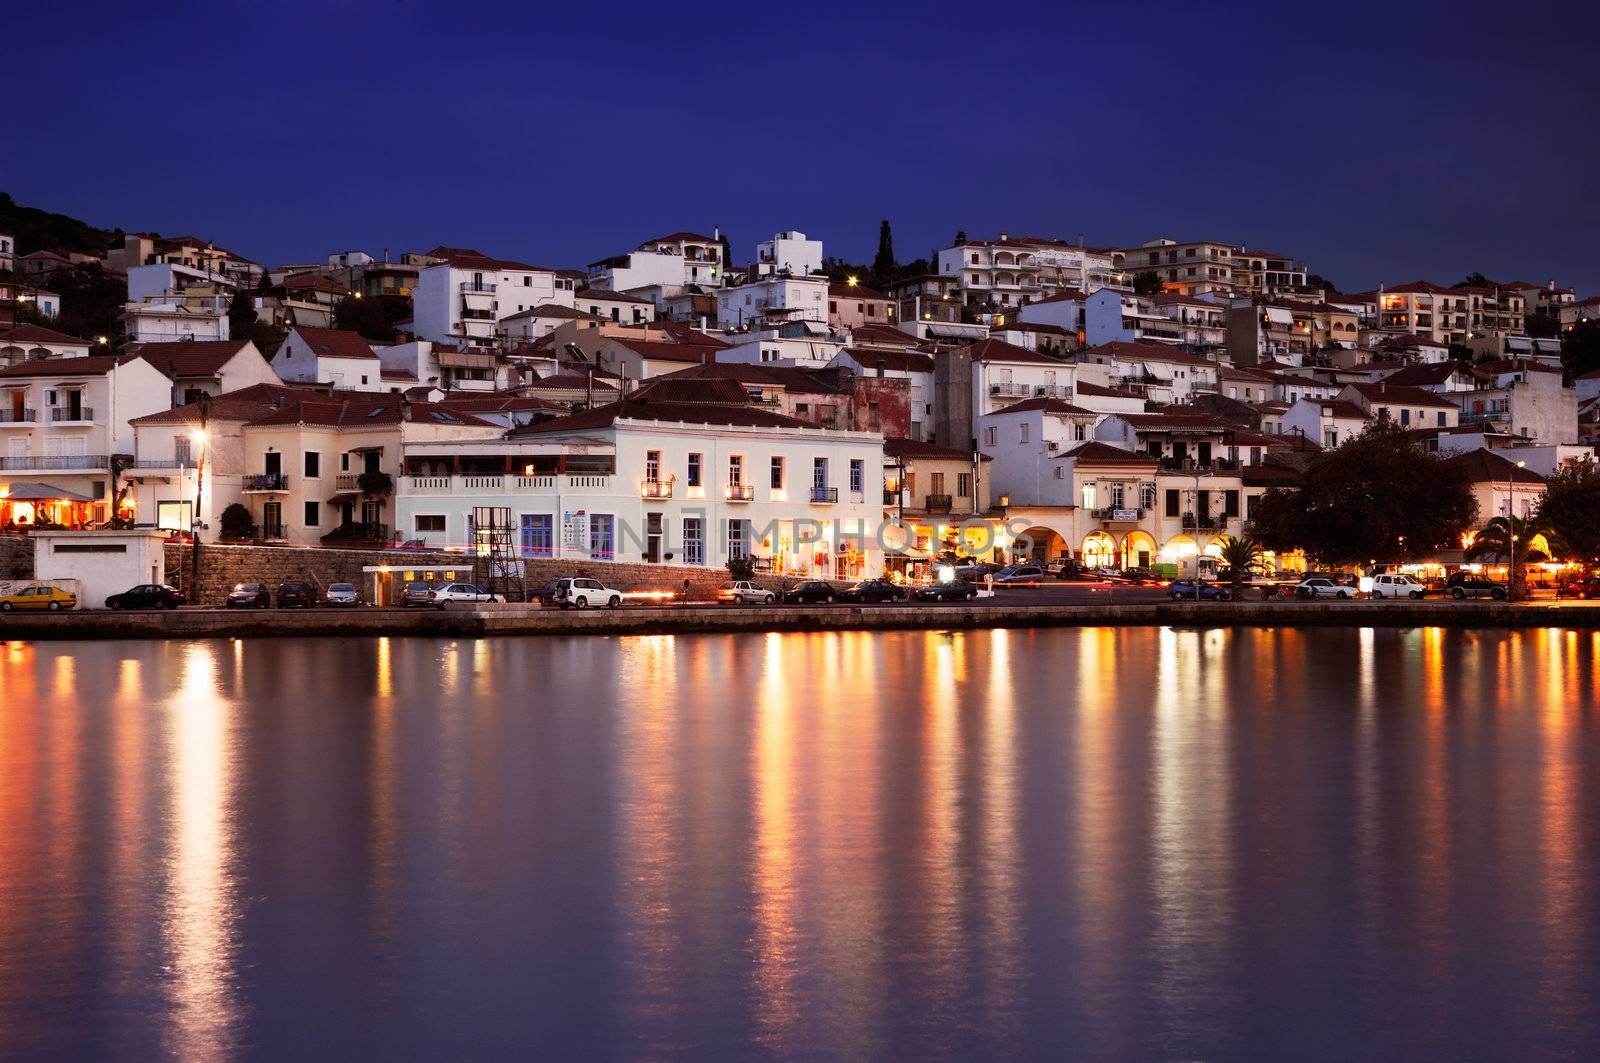 The town of Pylos, Greece by akarelias